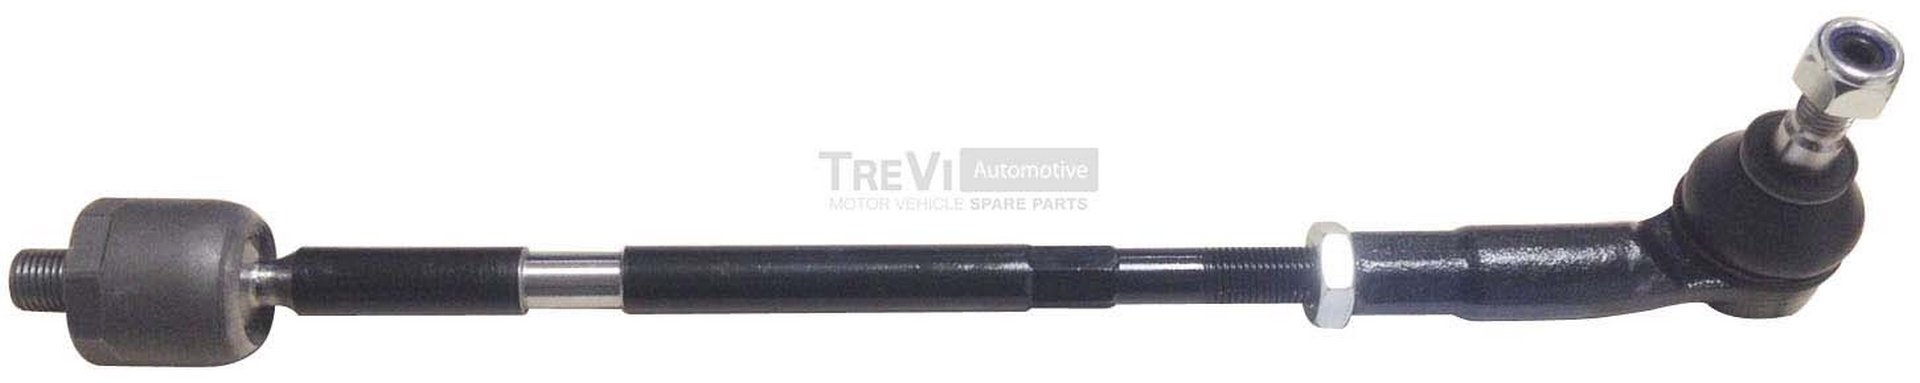 TREVI AUTOMOTIVE TRTT5333